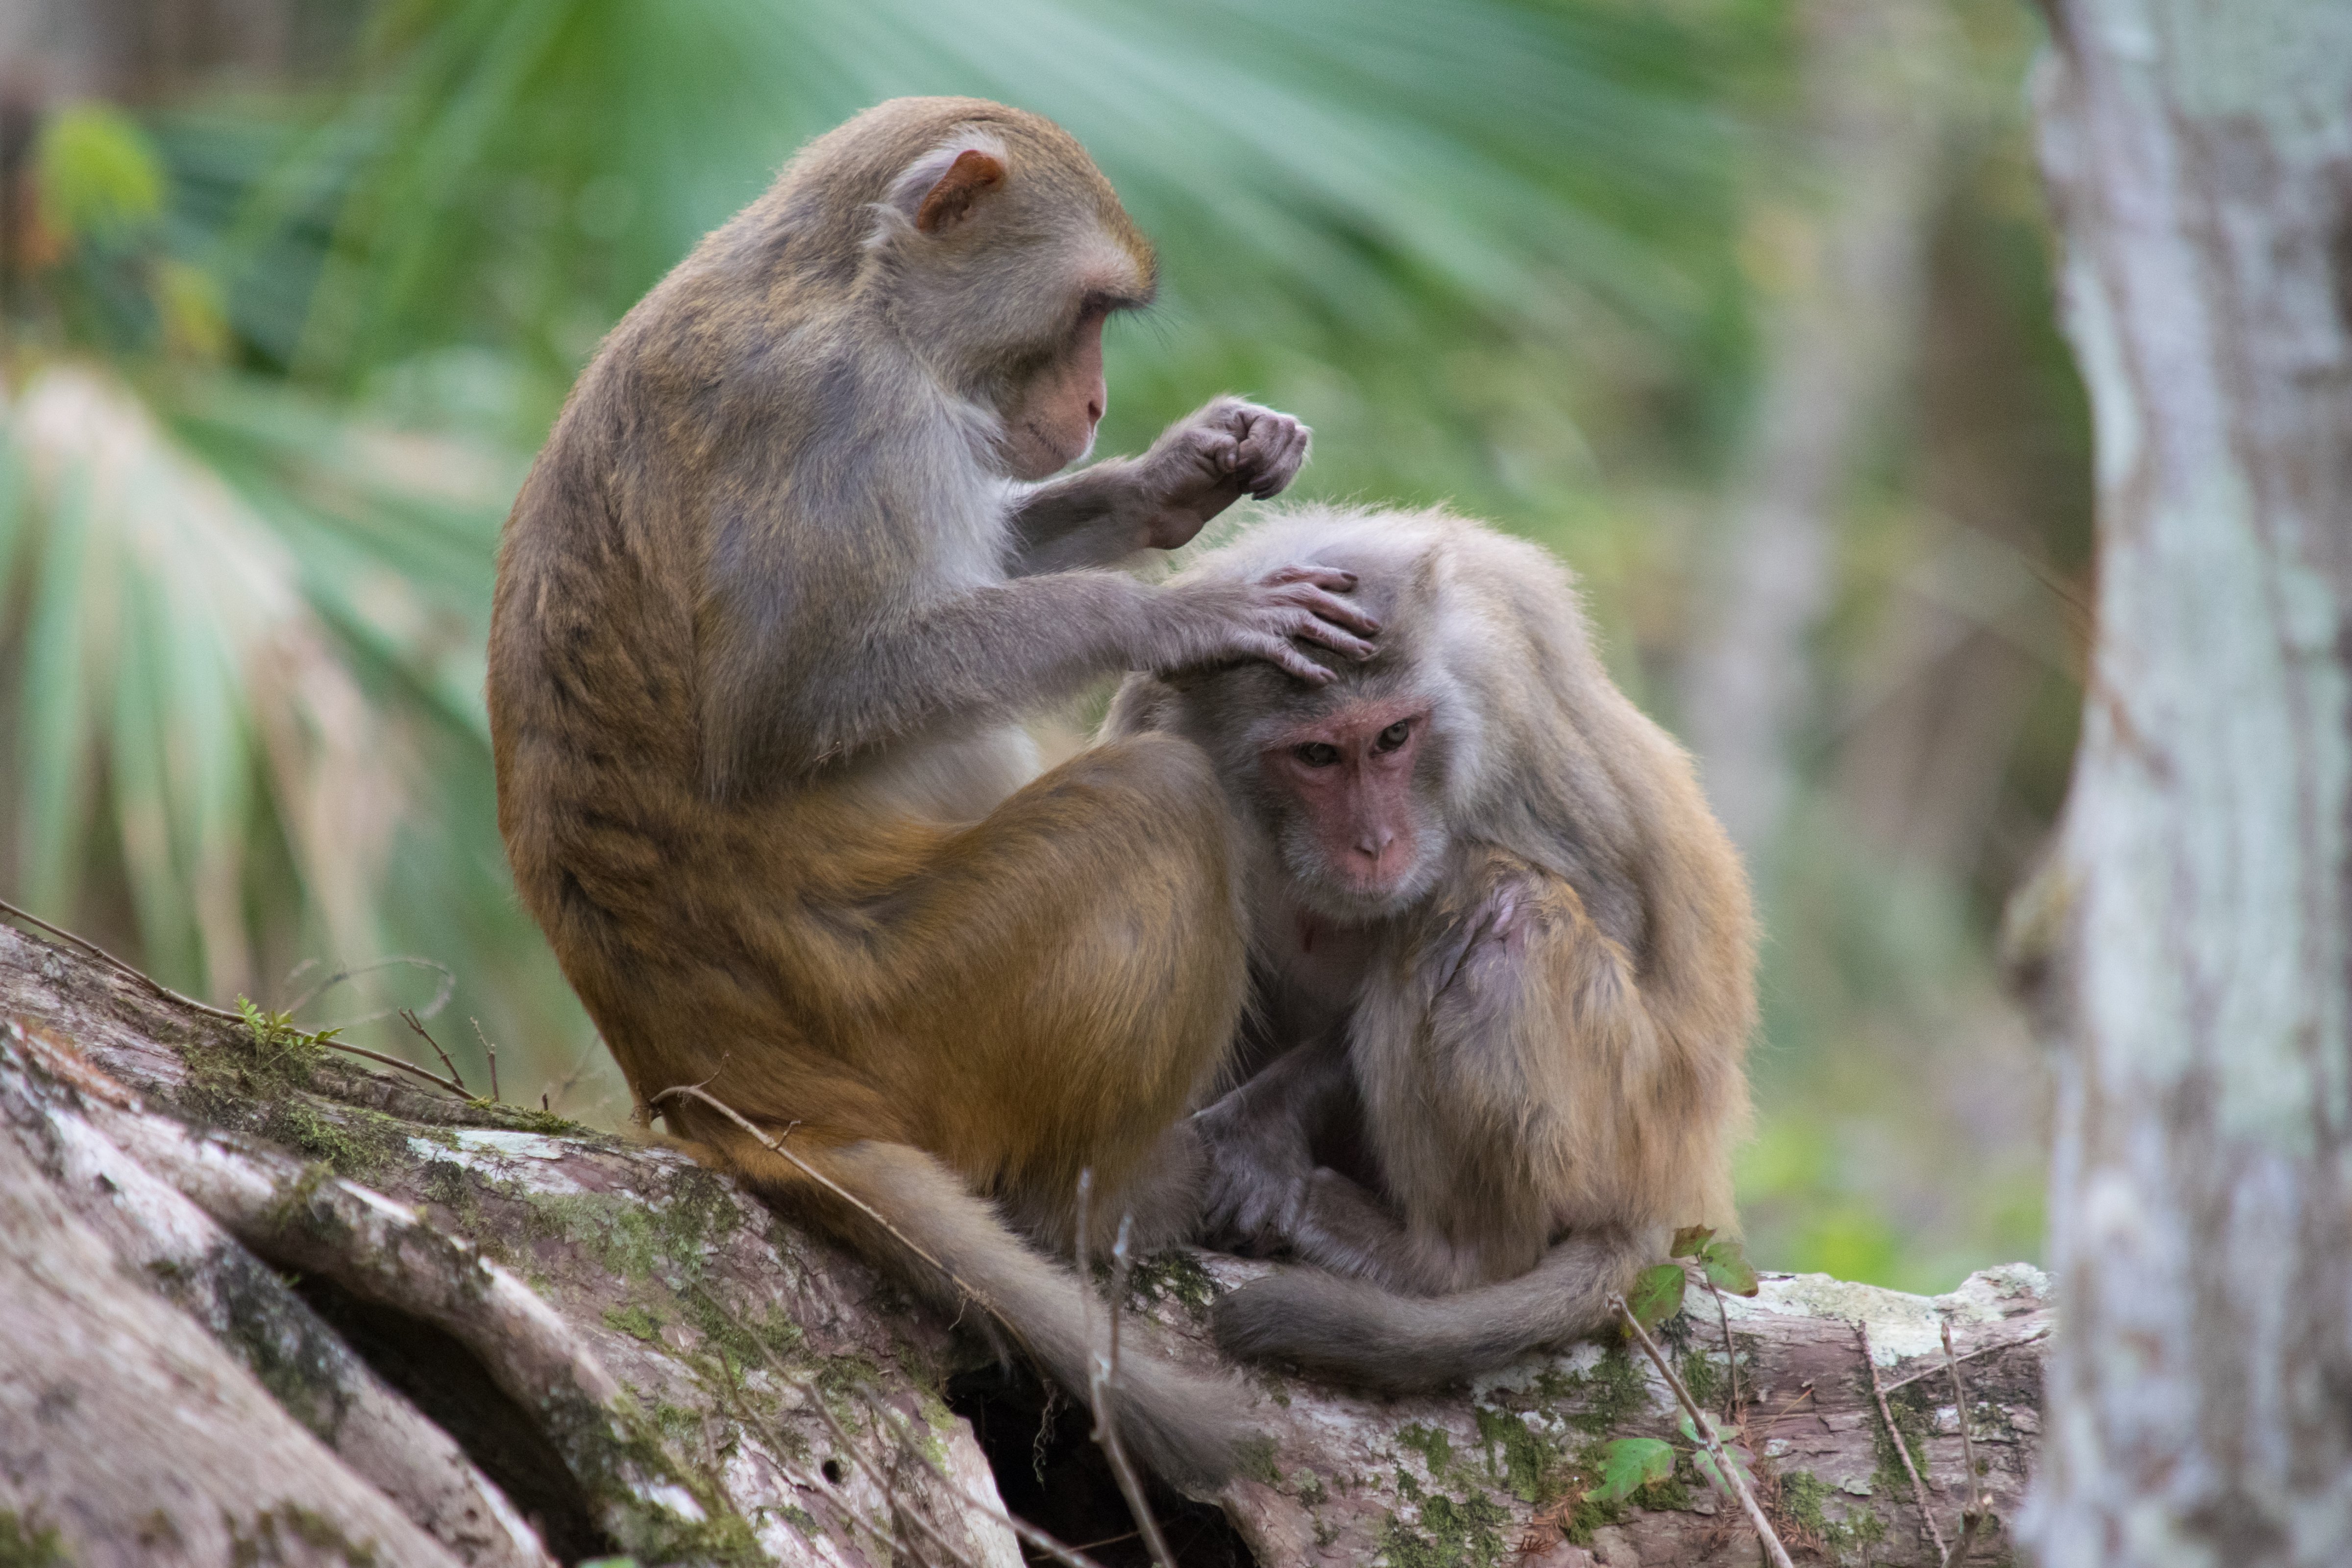 Wild monkeys inhabit the swamp along the Silver River in Ocala, Florida. (Michael Warren&mdash;Getty Images/iStockphoto)